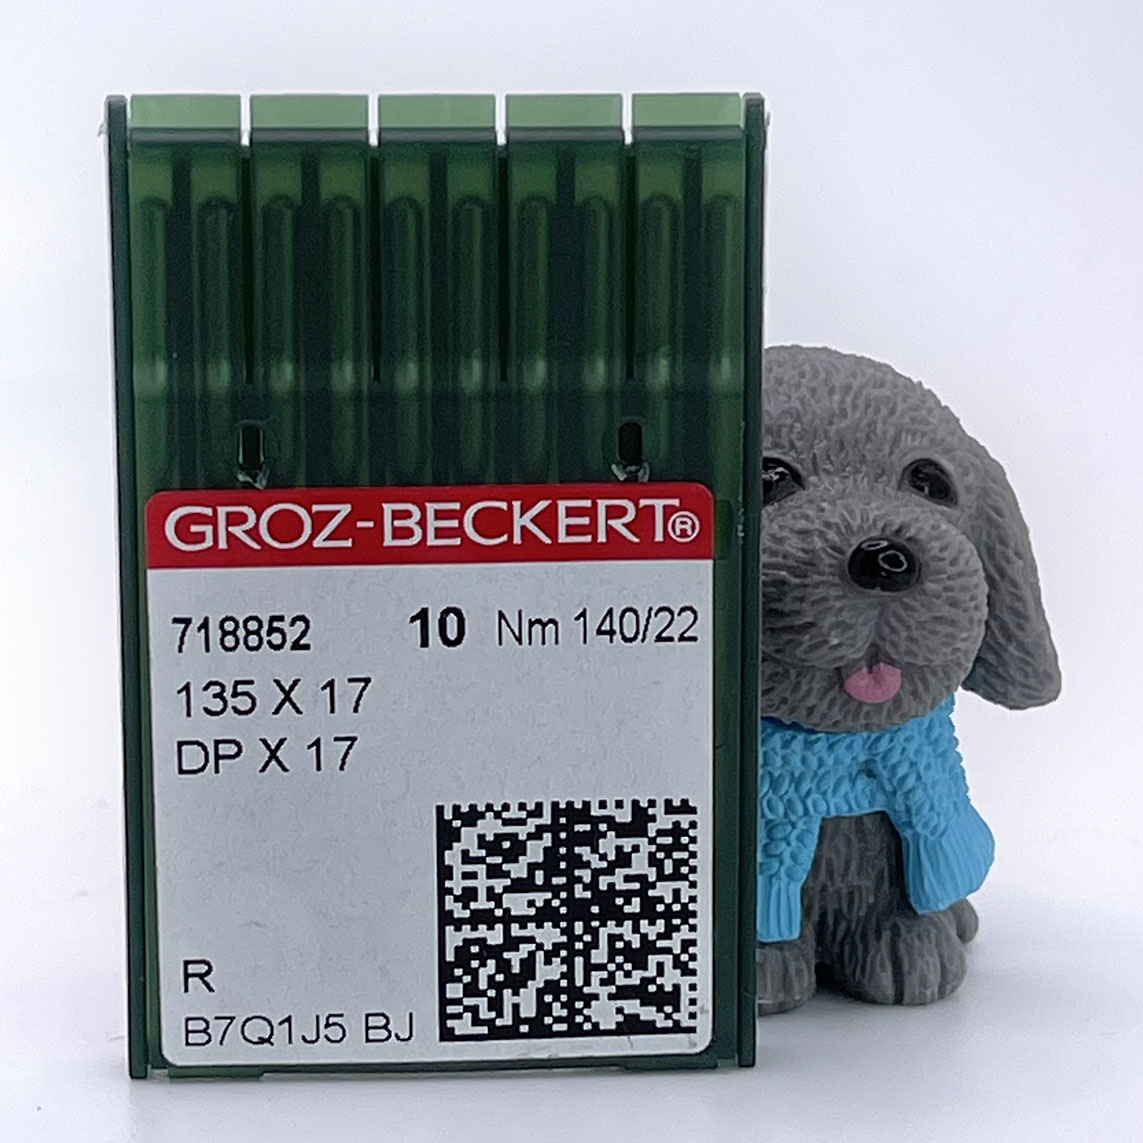 12 Quality Groz-Beckert Felting Needles with Storage Tube – Bam Fiber Works